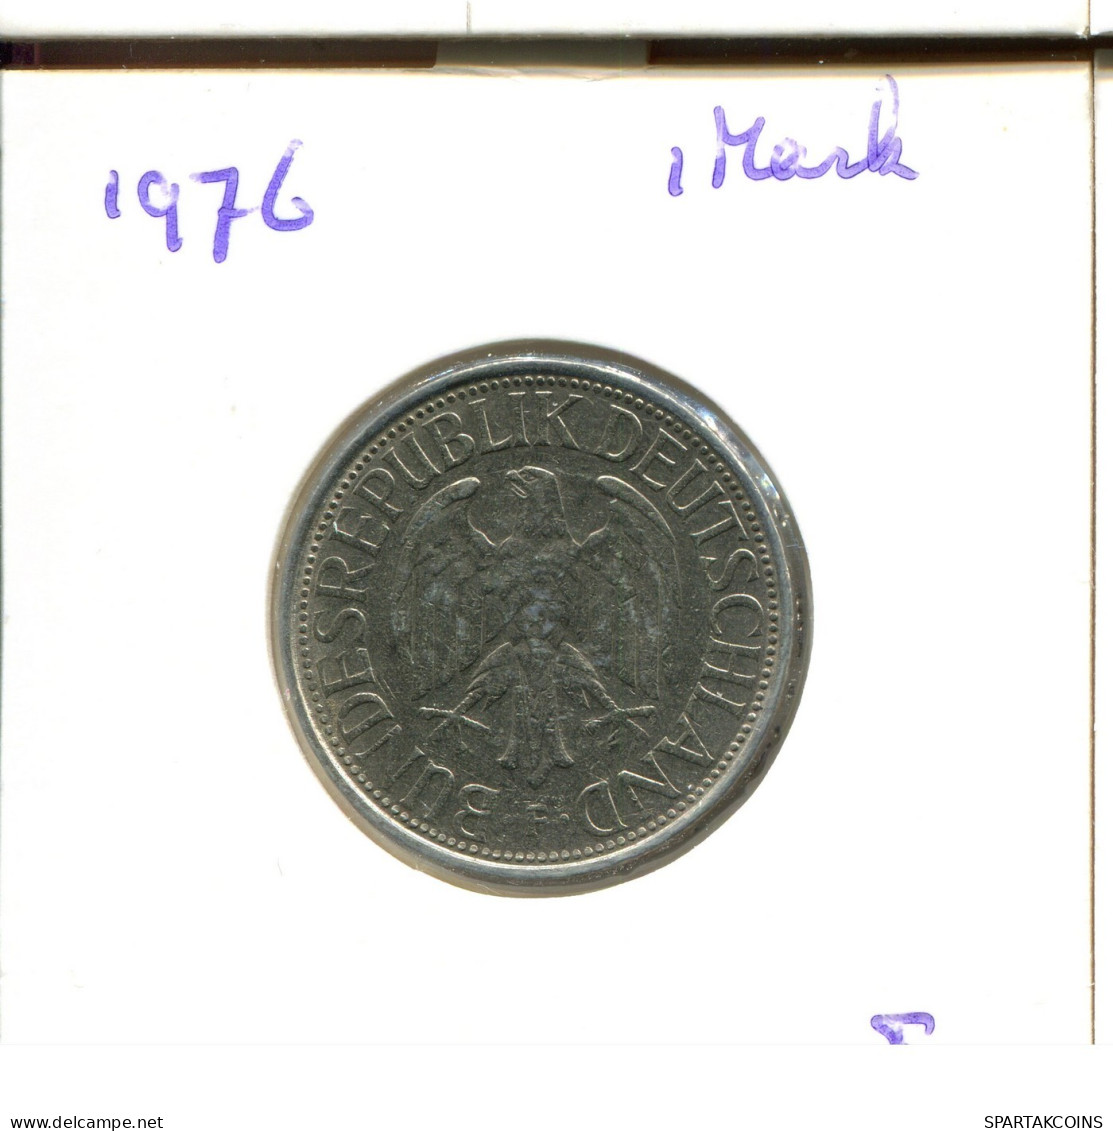 1 DM 1976 F WEST & UNIFIED GERMANY Coin #DA847.U.A - 1 Marco